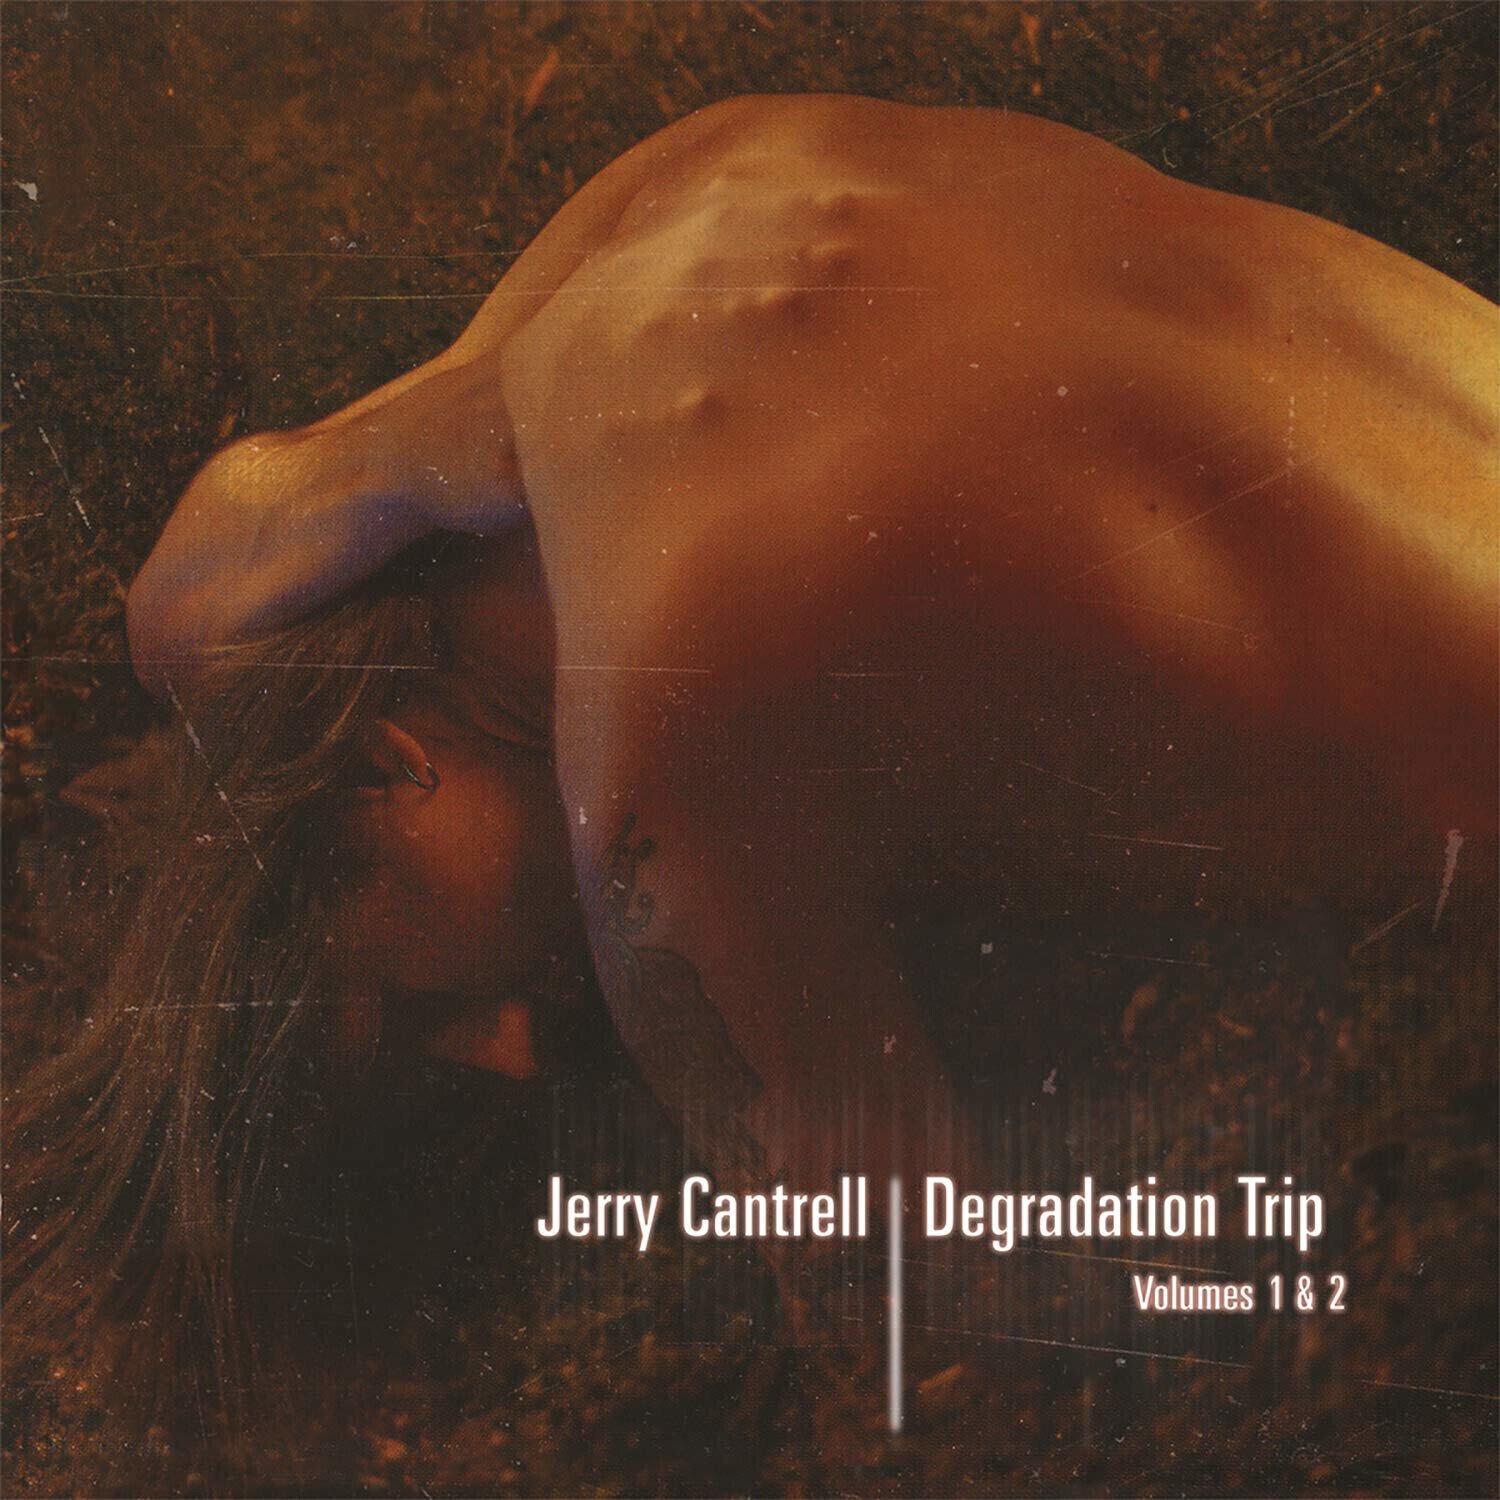 Vinyl Record Jerry Cantrell - Degradation Trip 1&2 (4 LP)